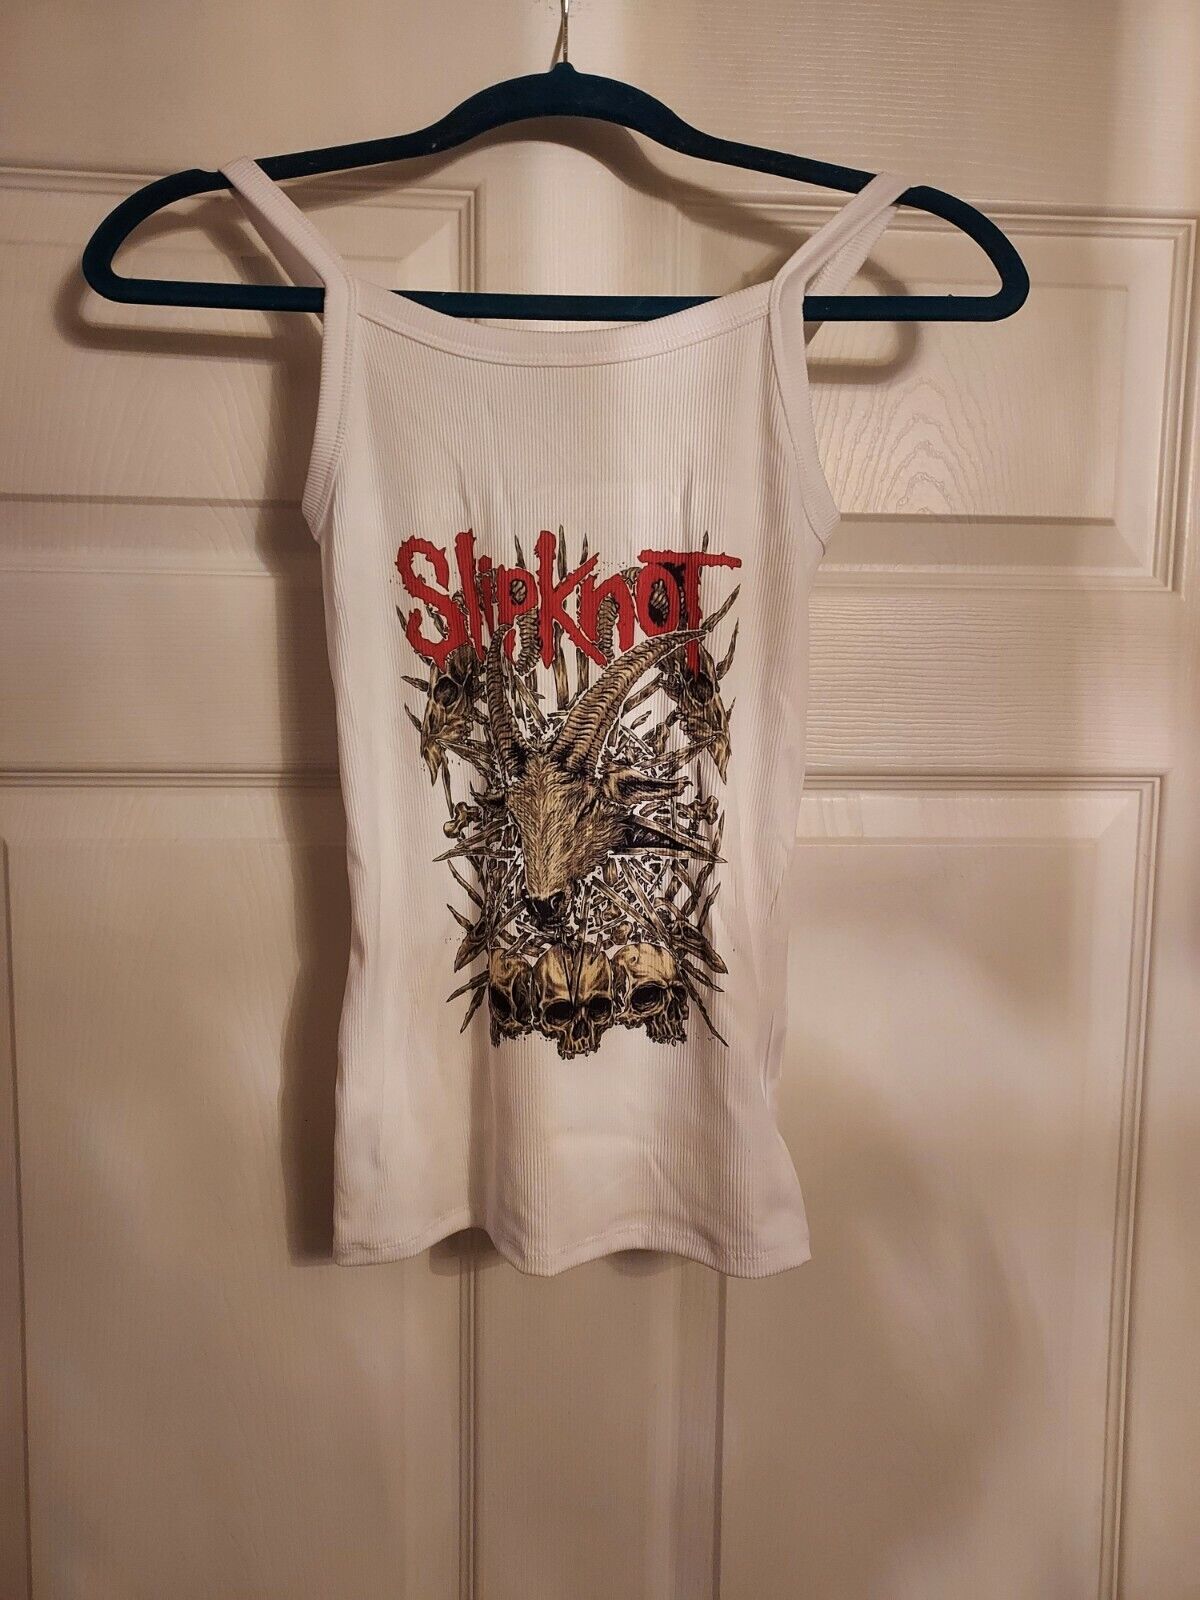 Slipknot tank top slipknot Shirt size available xs to 3xl | eBay